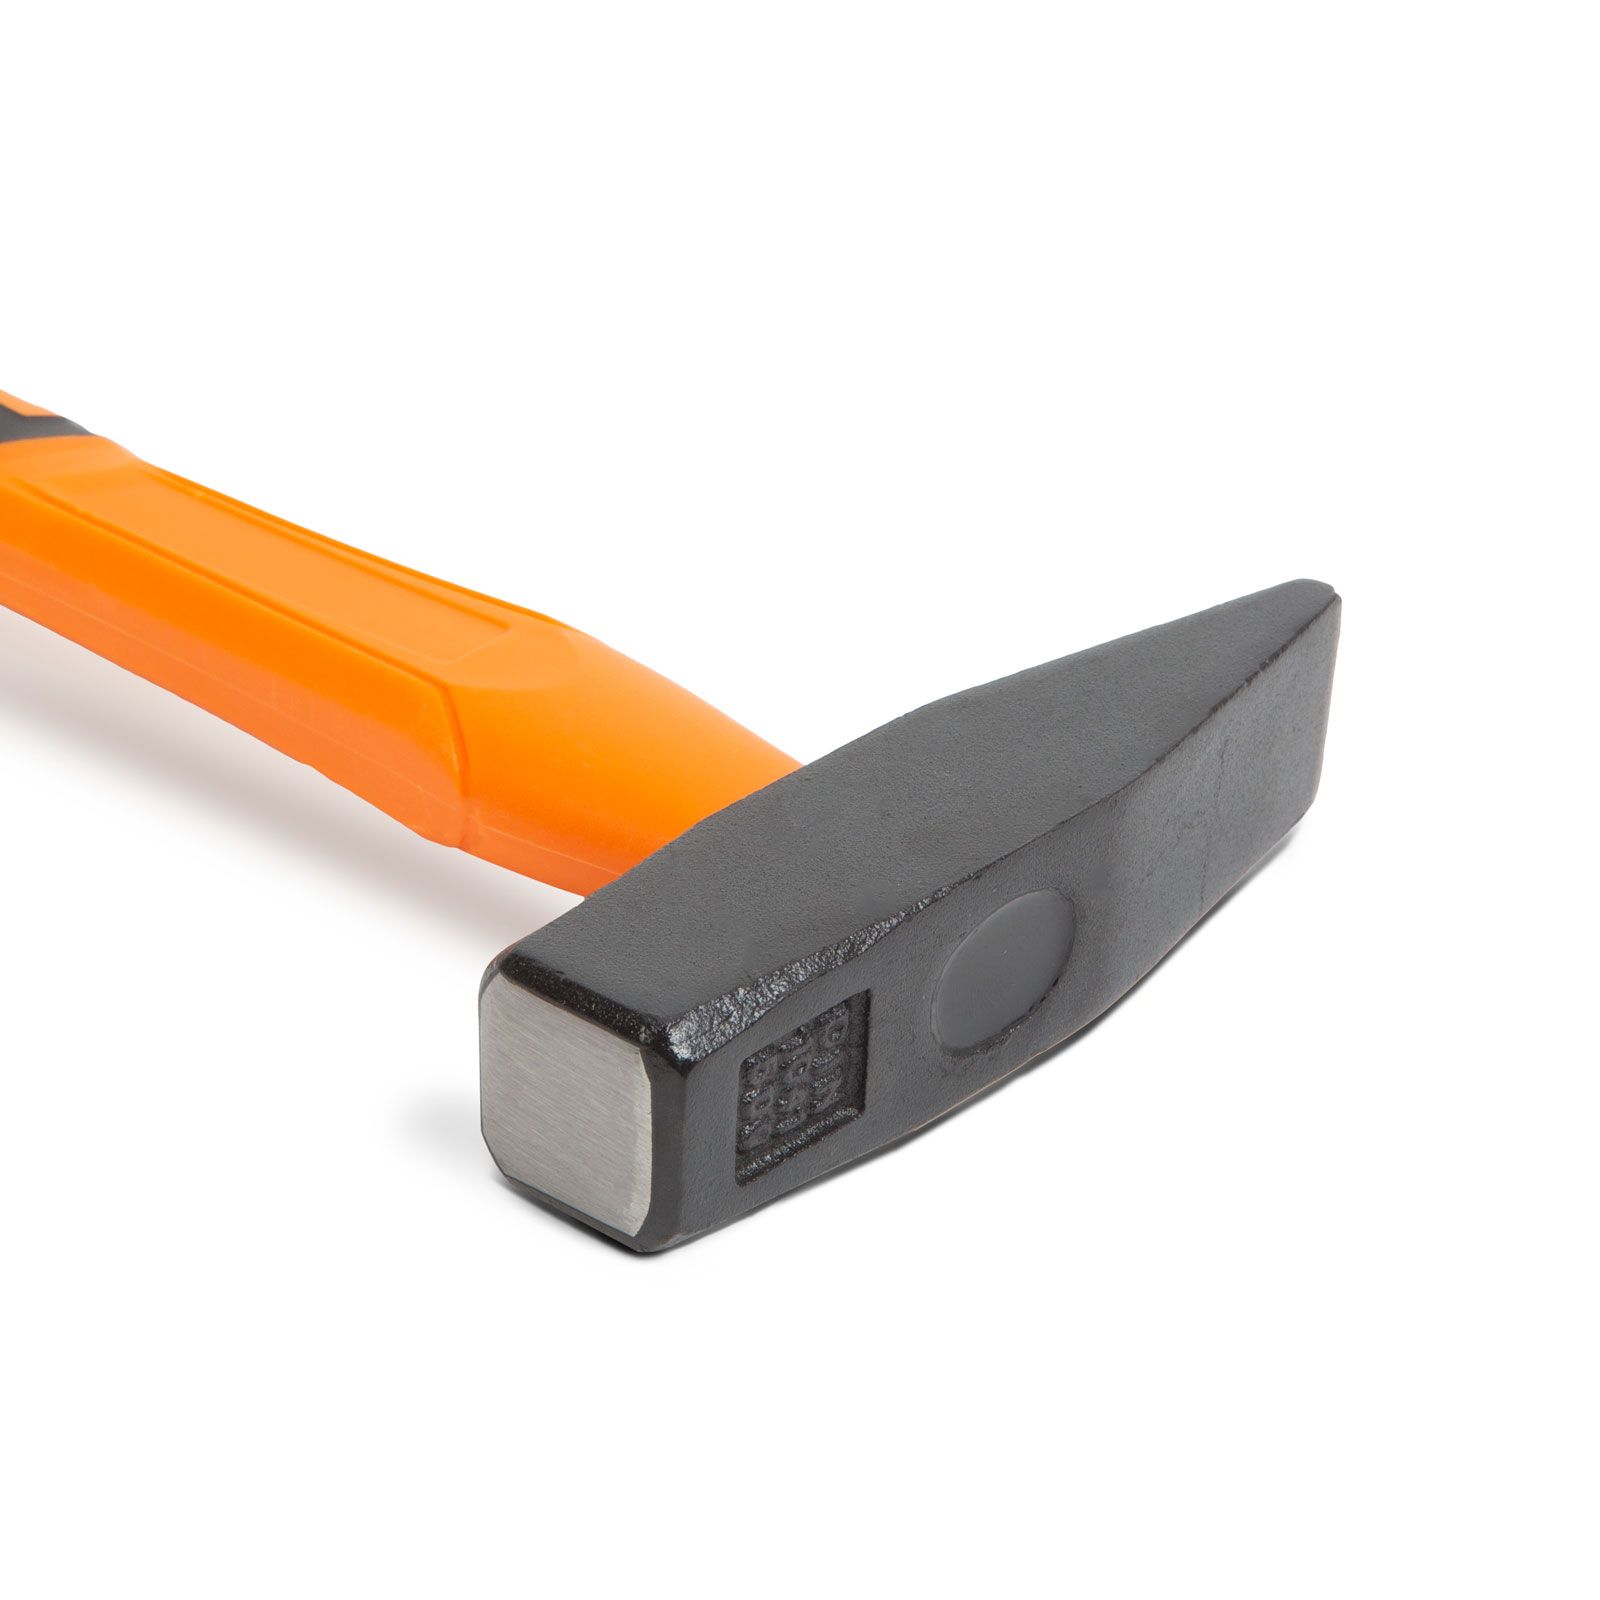 Machinist hammer with fiberglass handle - 500 g thumb